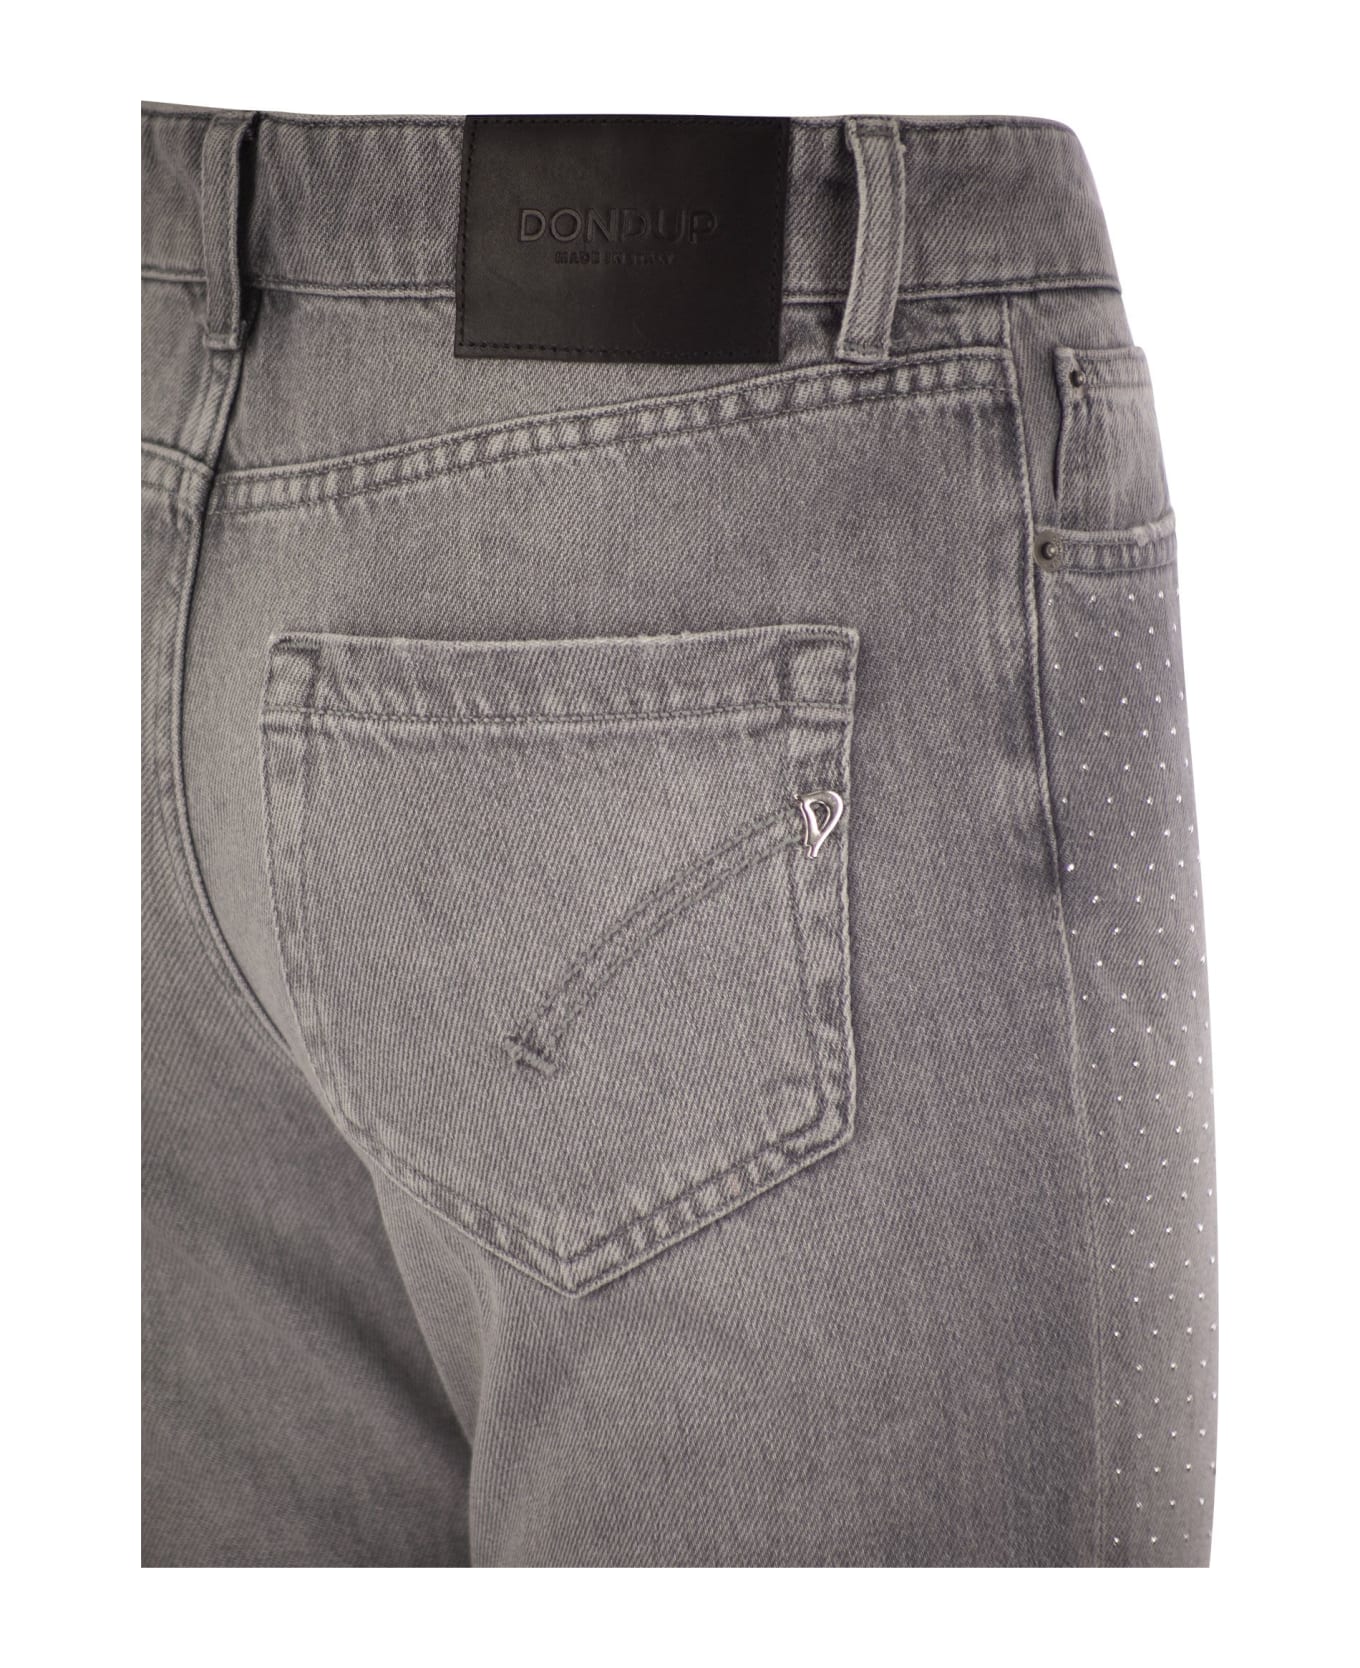 Dondup Koons - Loose Cotton Jeans - Grey